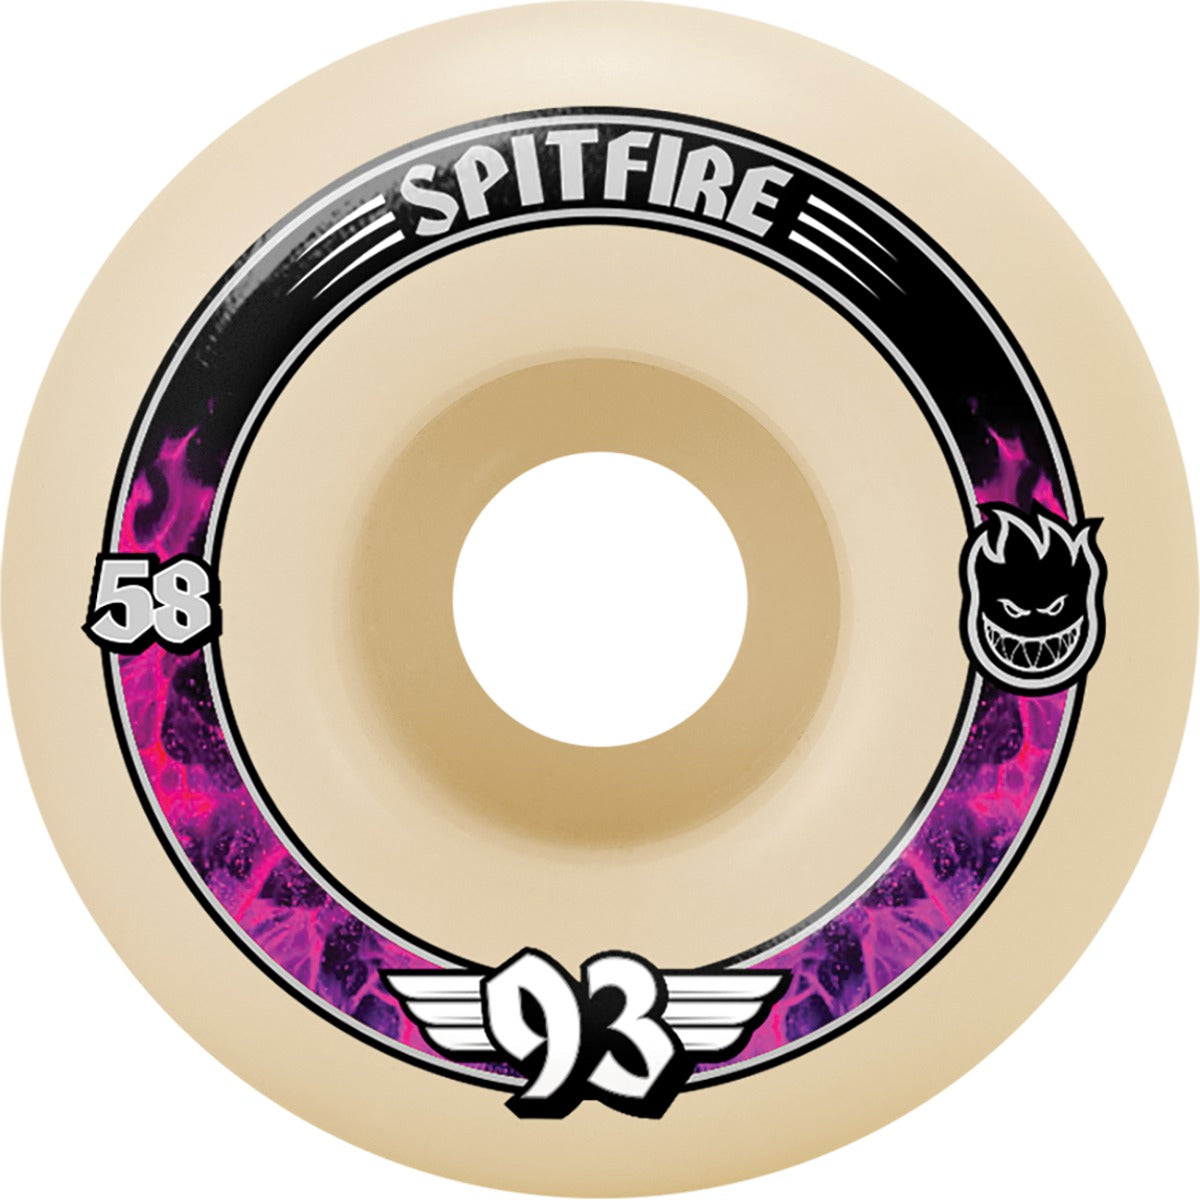 Spitfire Wheels - F493 Radials - Natural